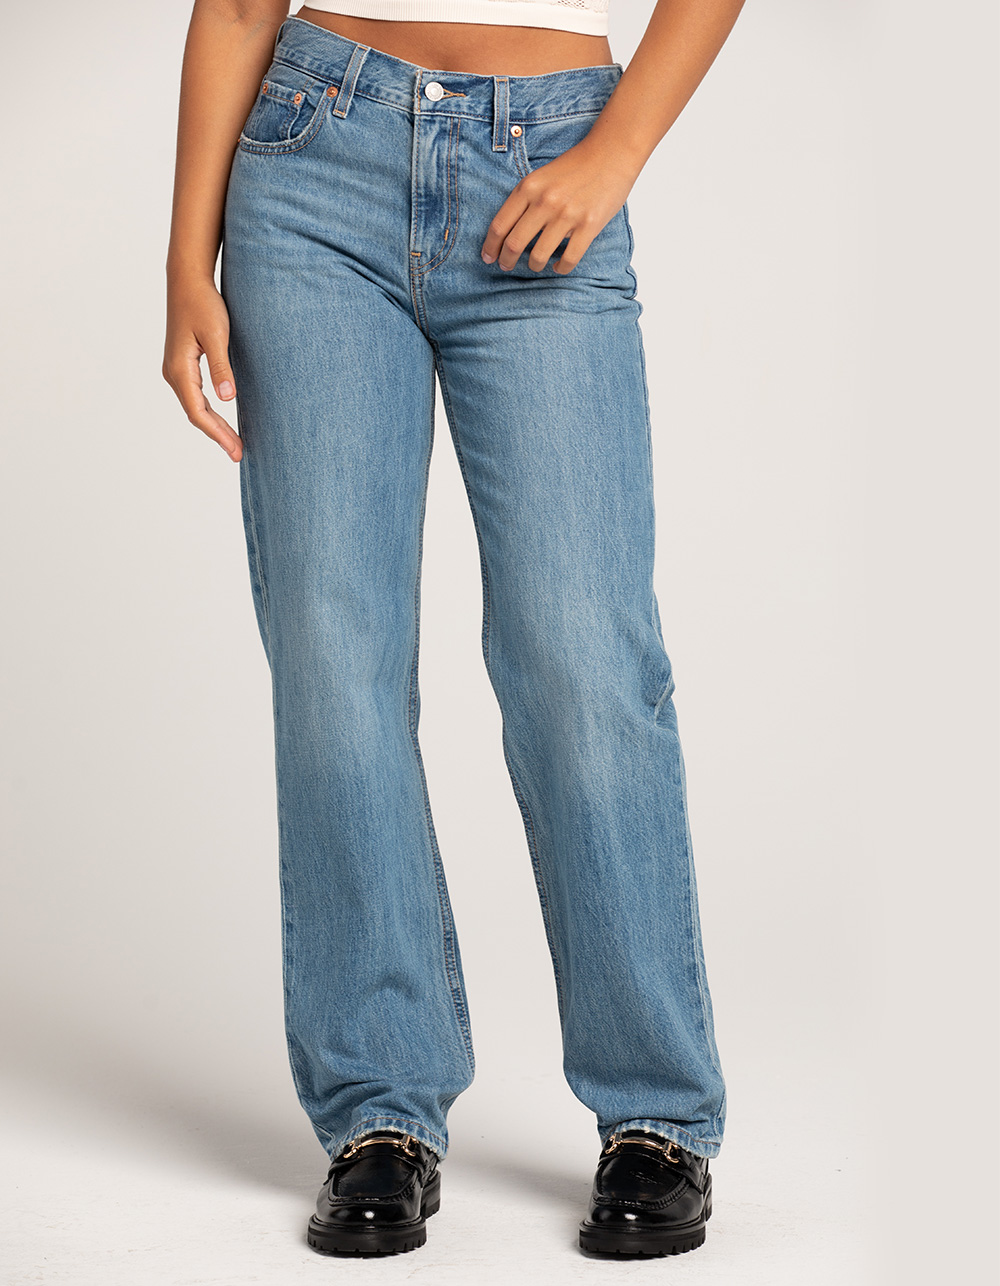 LEVI'S Low Pro Womens Jeans - Go Ahead